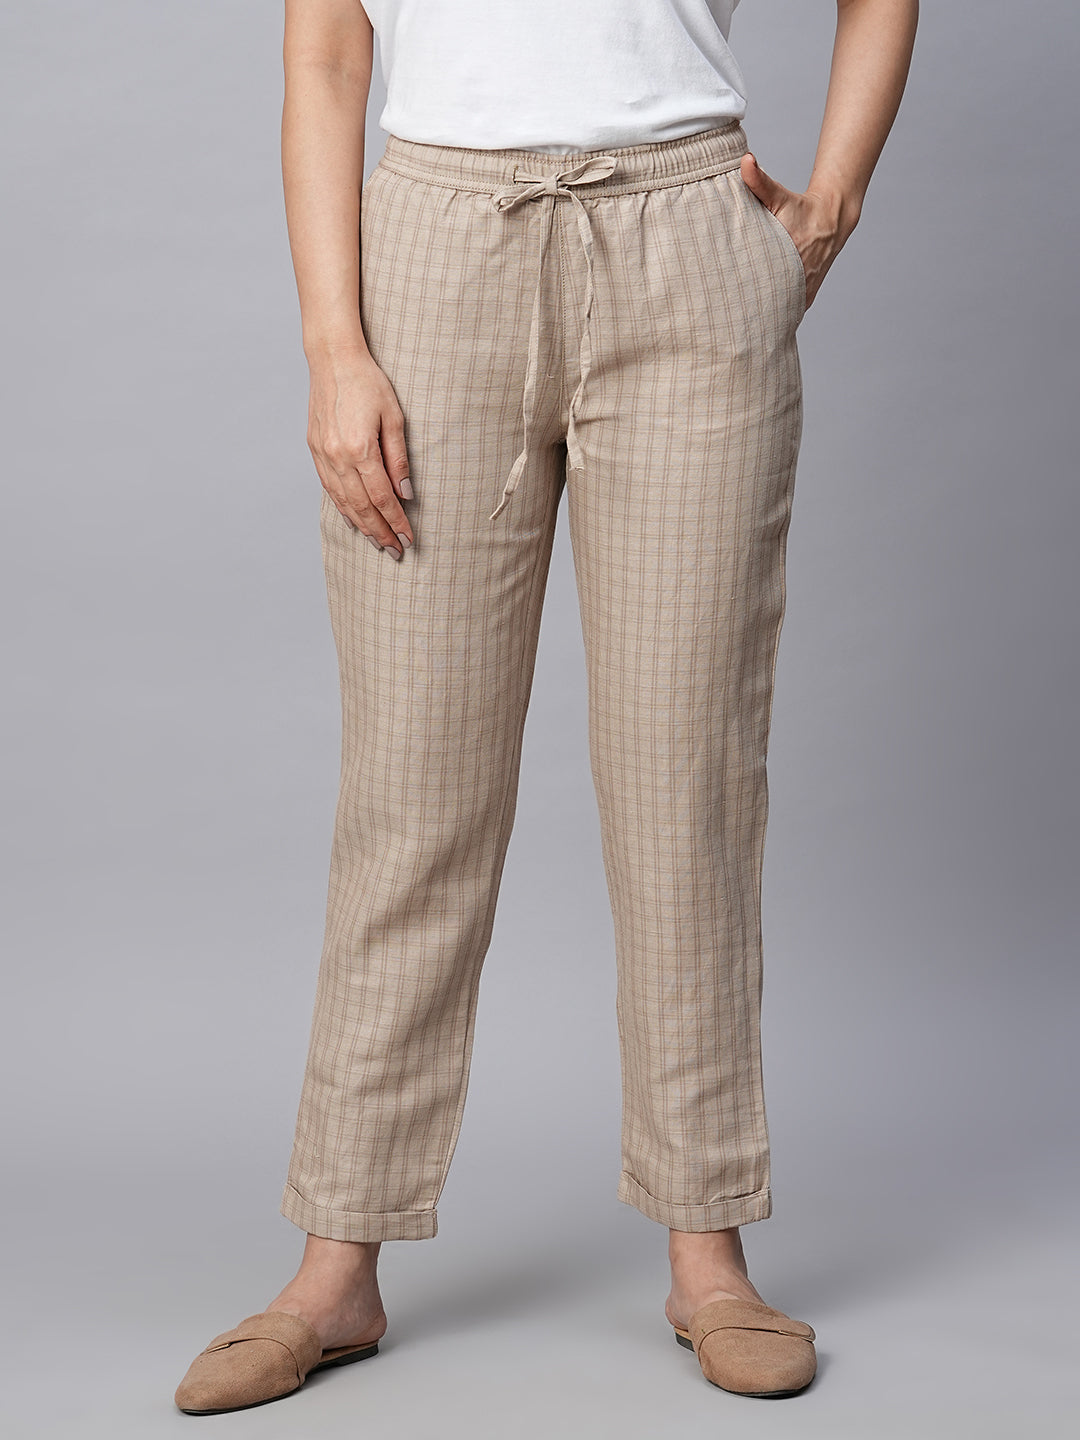 Women's Natural Linen Cotton Regular Fit Pant